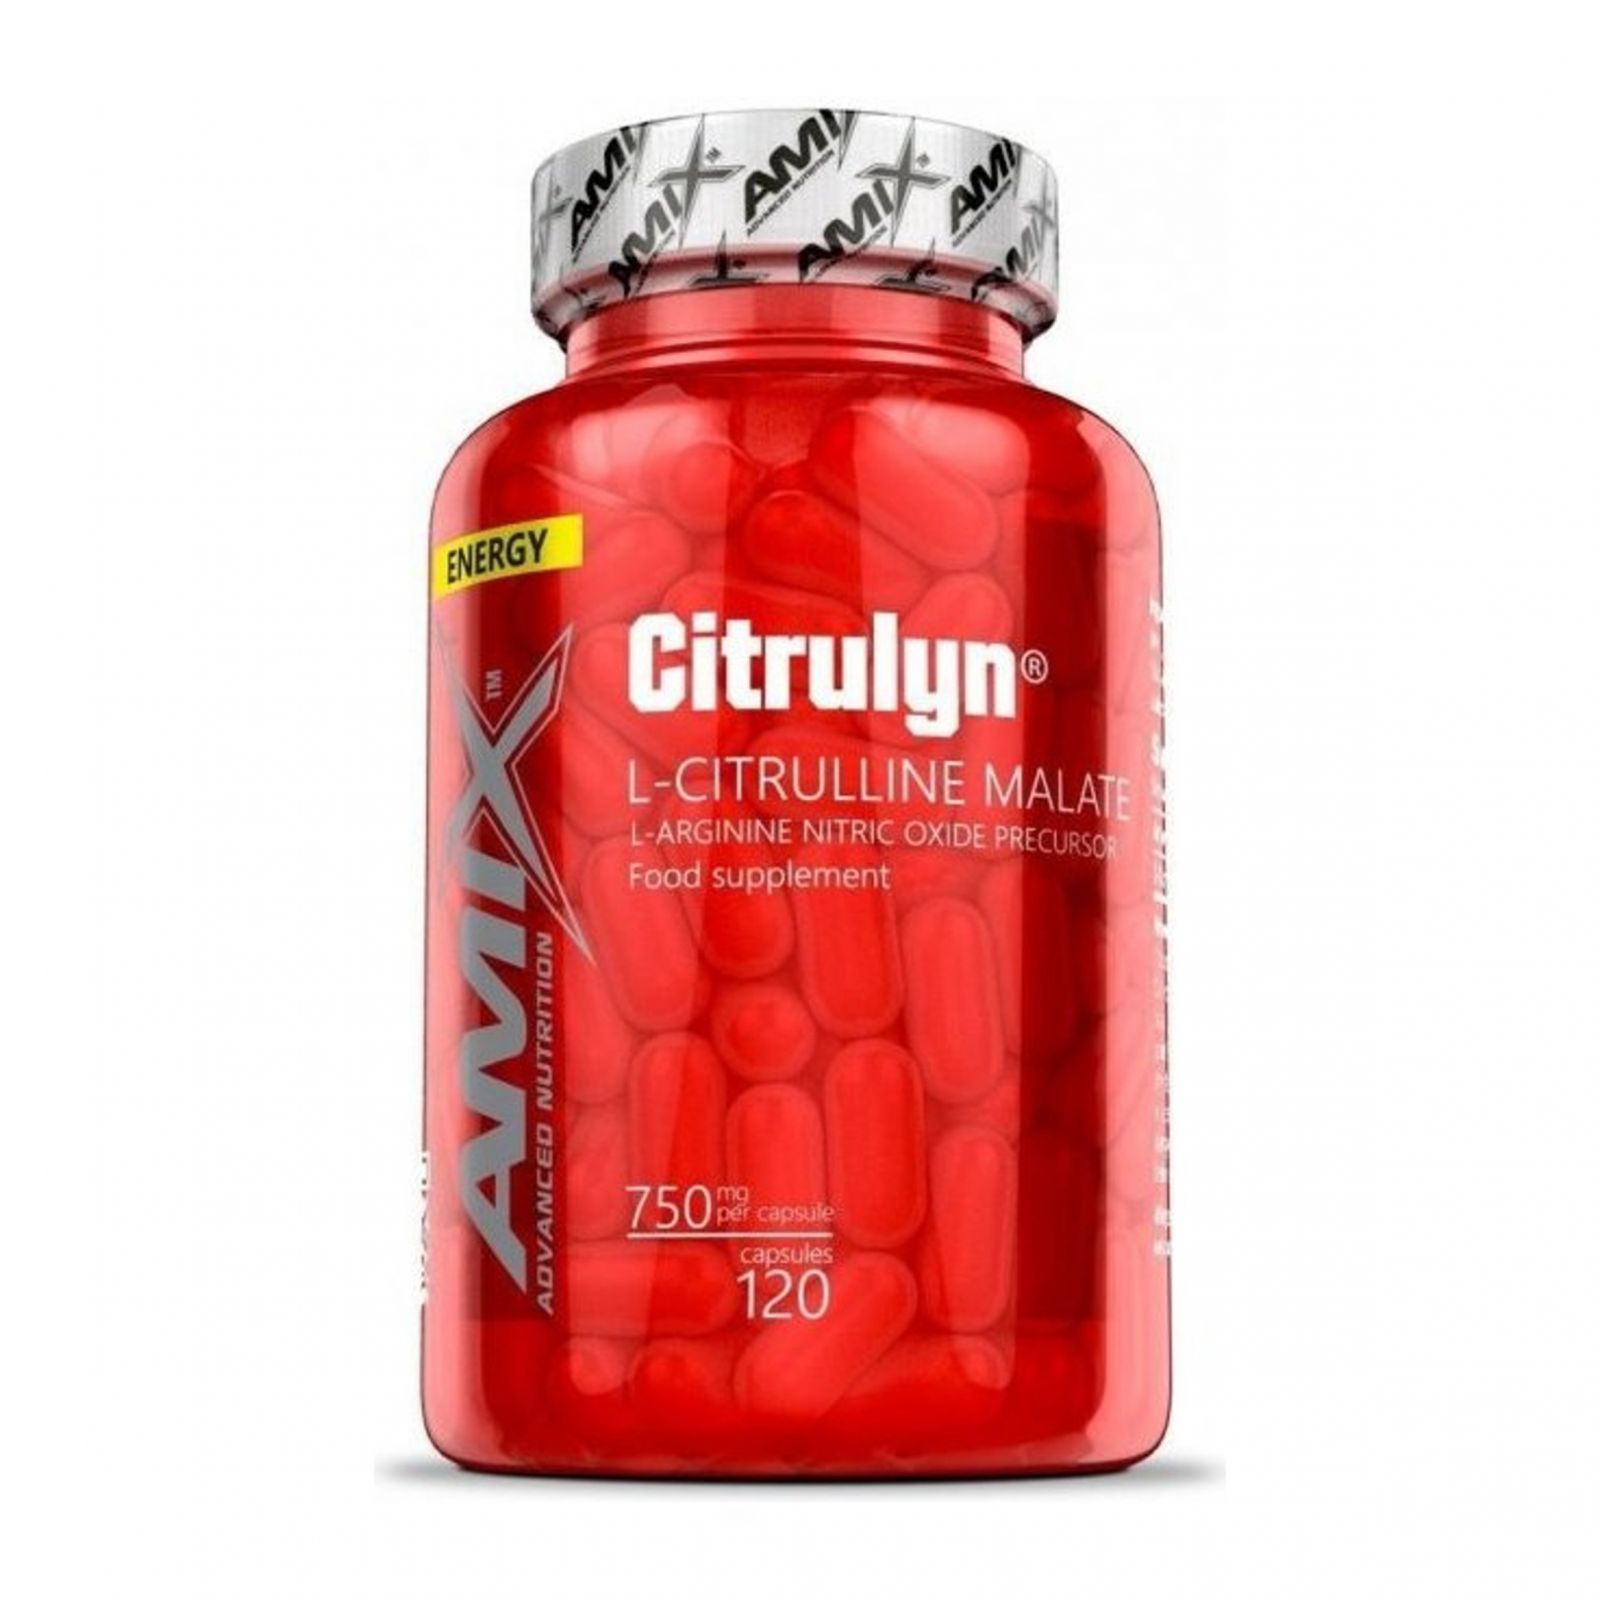 Спортвики. L-Citrulline 750 мг 90 капсул. Nutrend Inosine • 100 капсул. Инозин/Inosine Nutrend, капс. Инозин капсулы №100/Inosine Capsules №100 Nutrend.